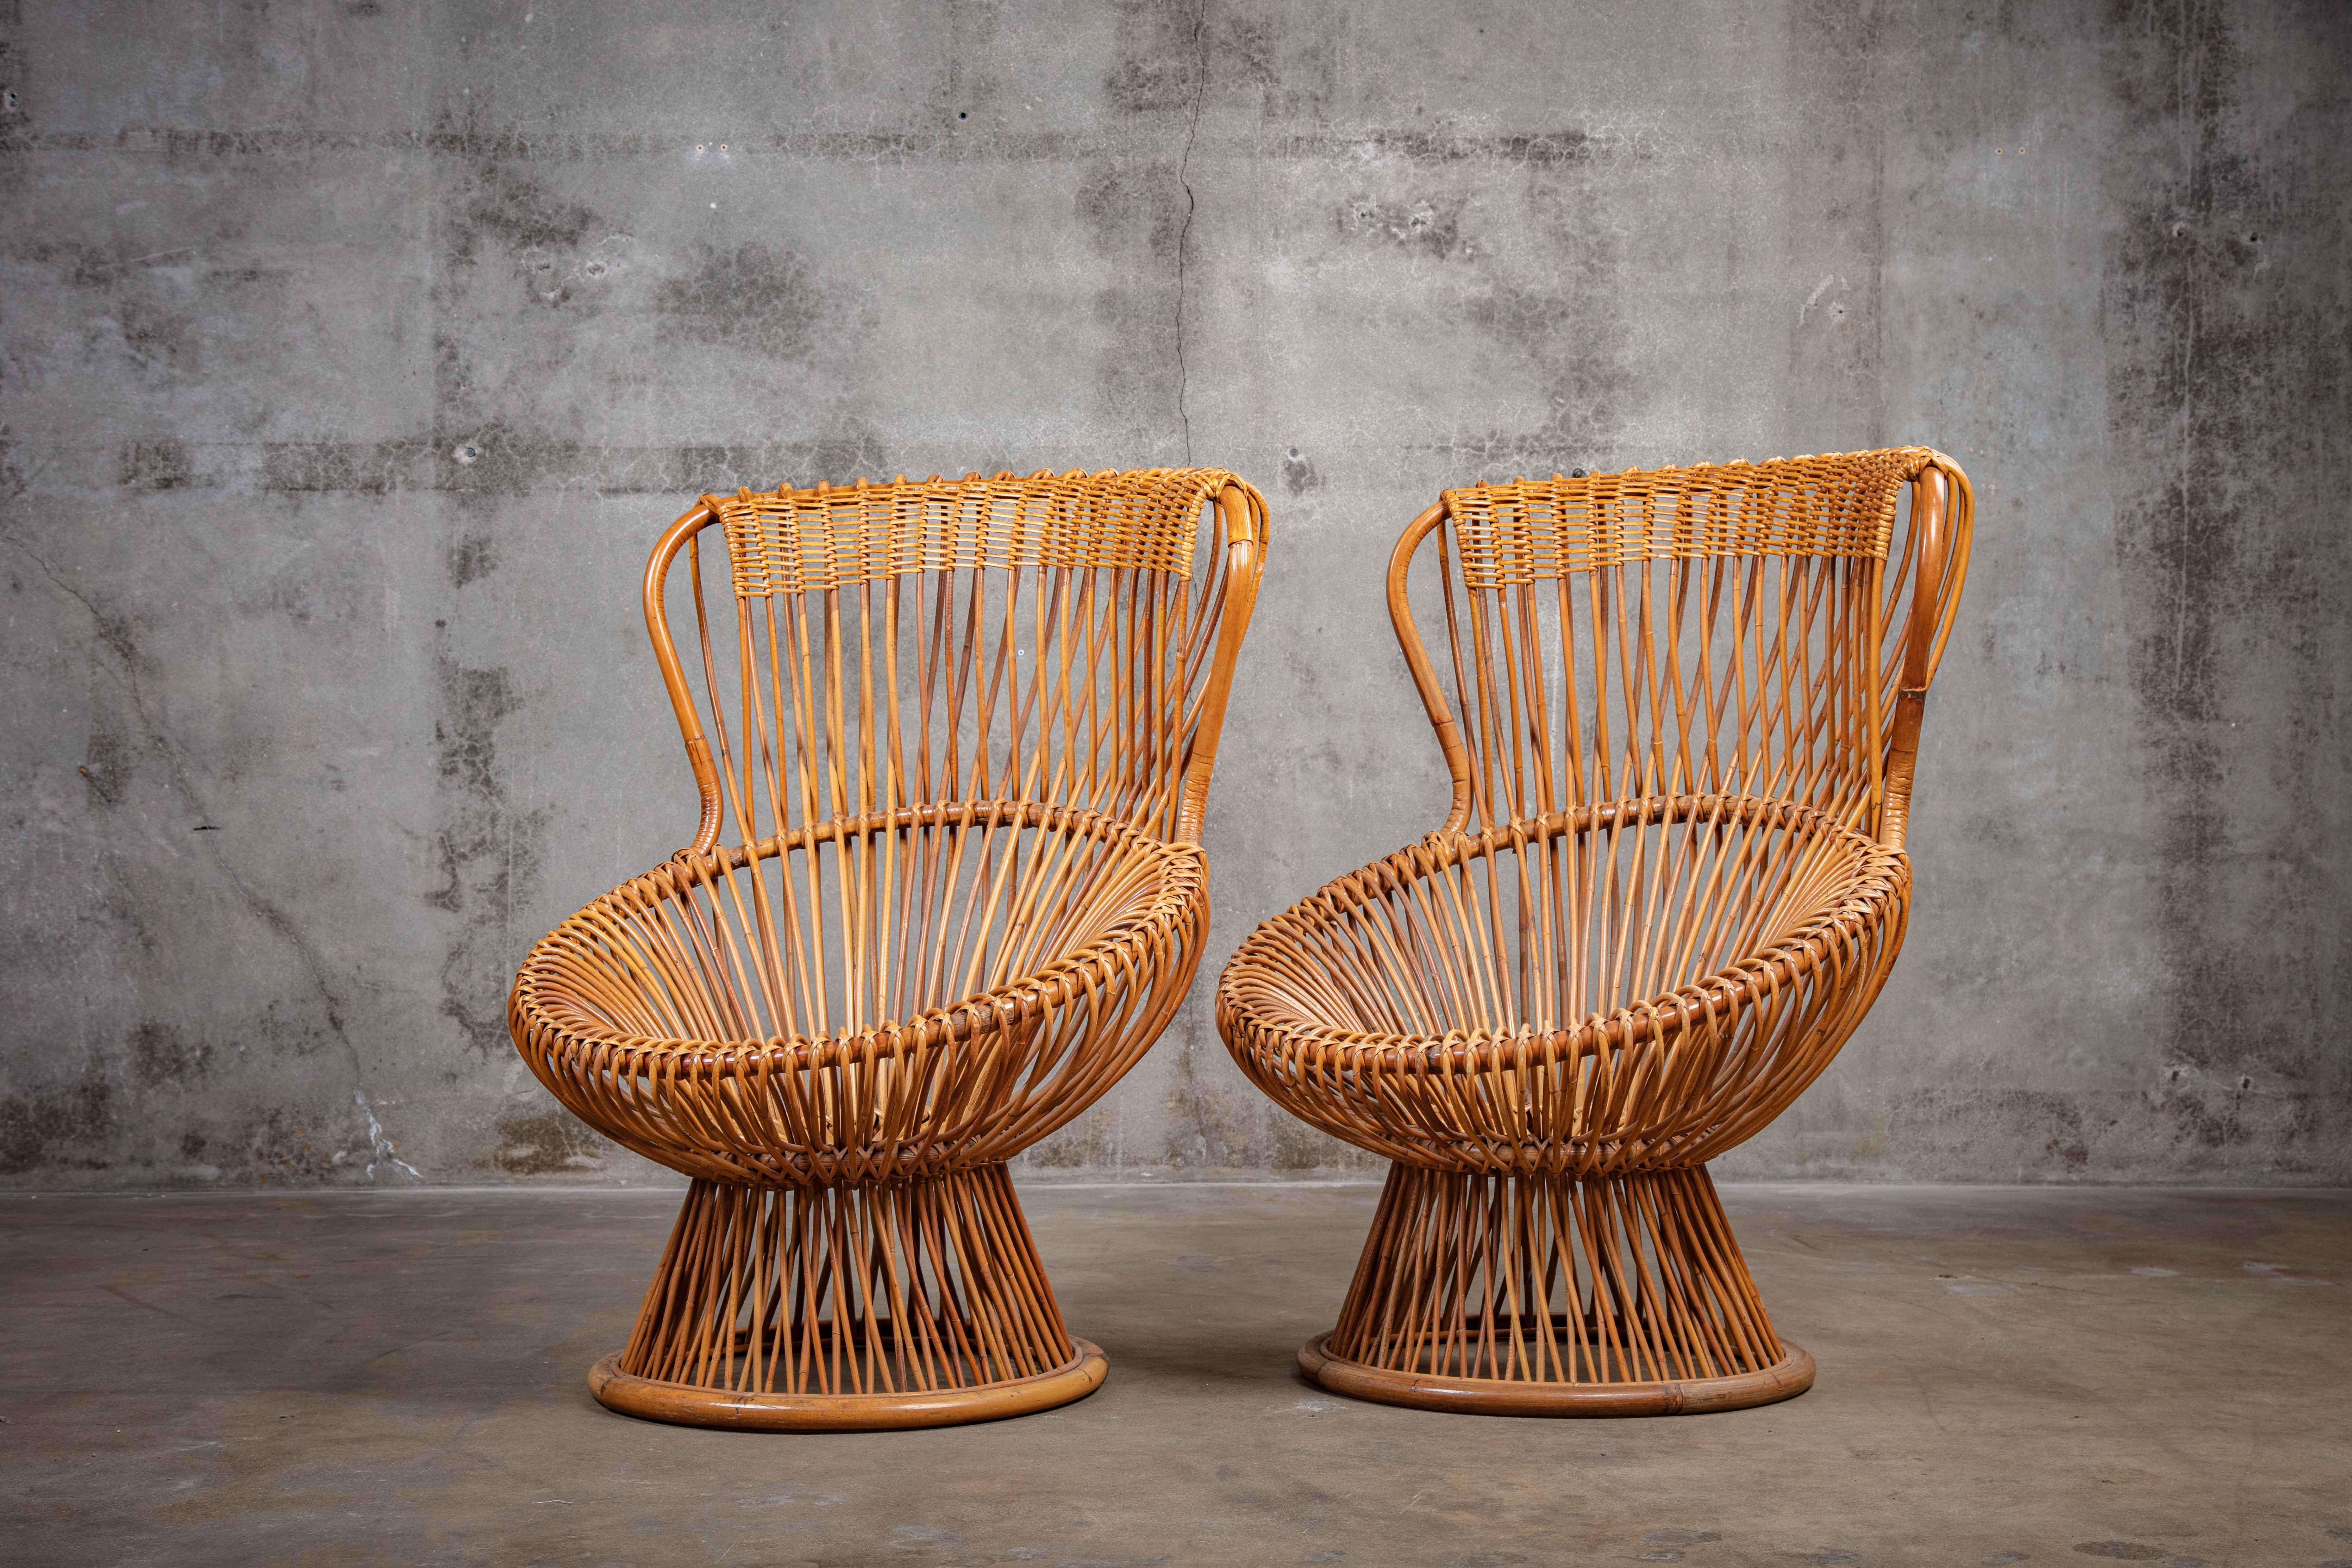 Pair of Franco Albini 'Margherita' cane chairs, 1960s.

Measure: Seat 16